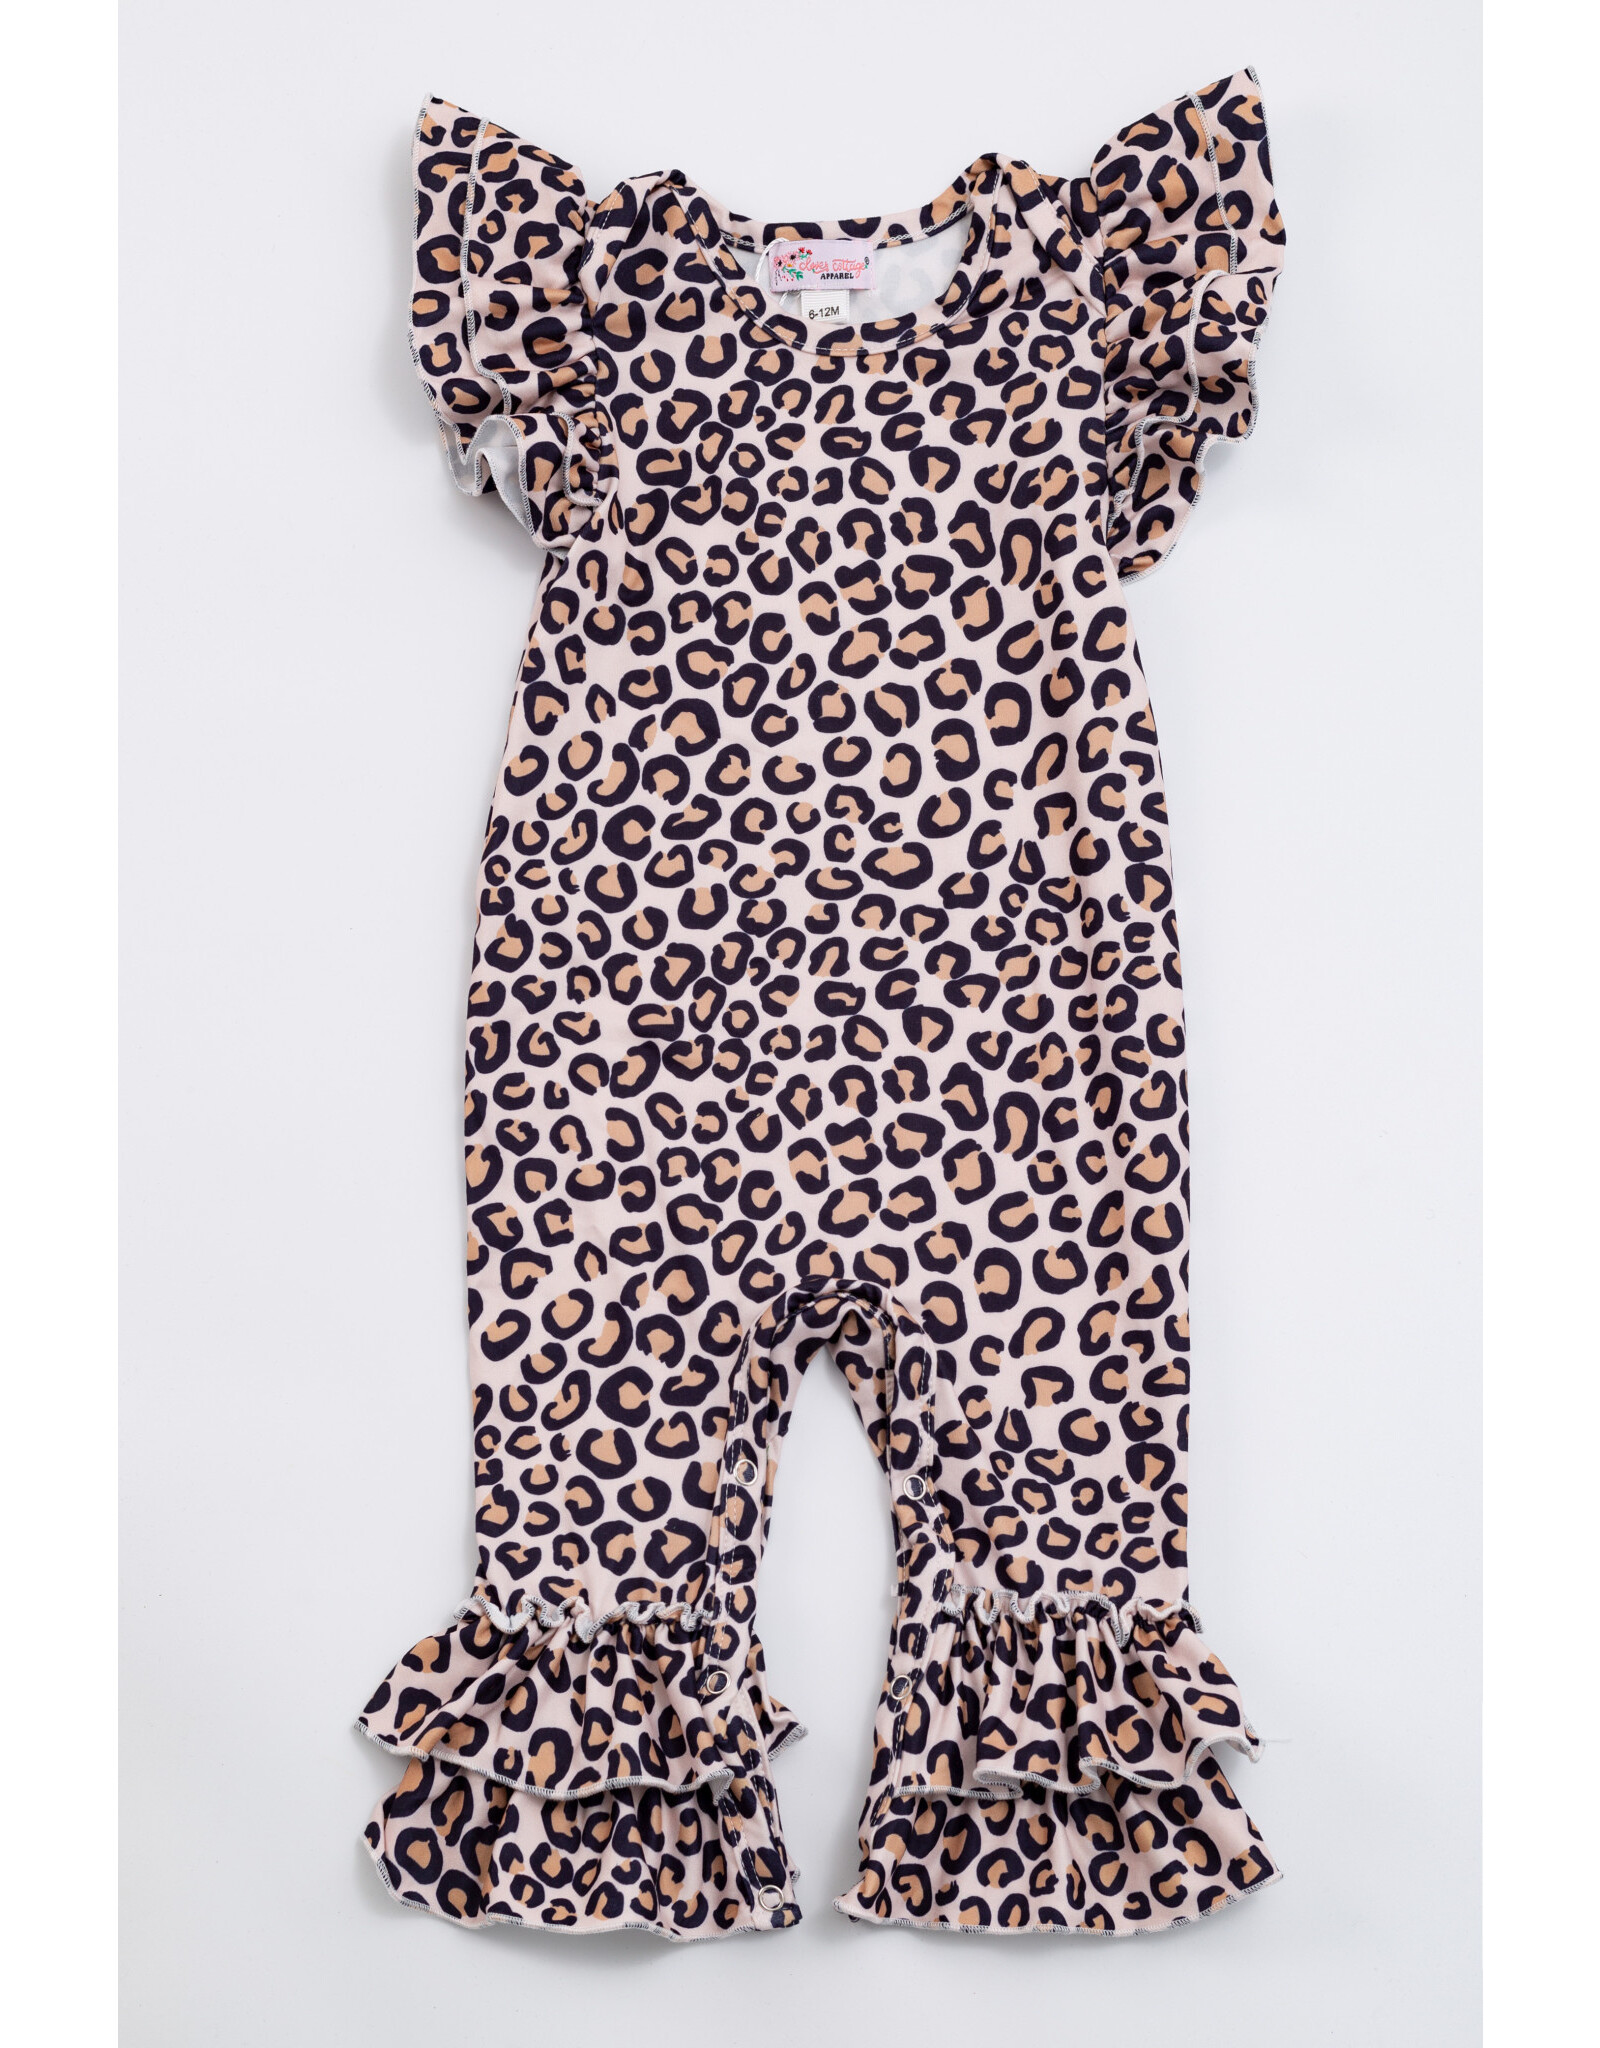 Cheetah Baby romper 6-12 month